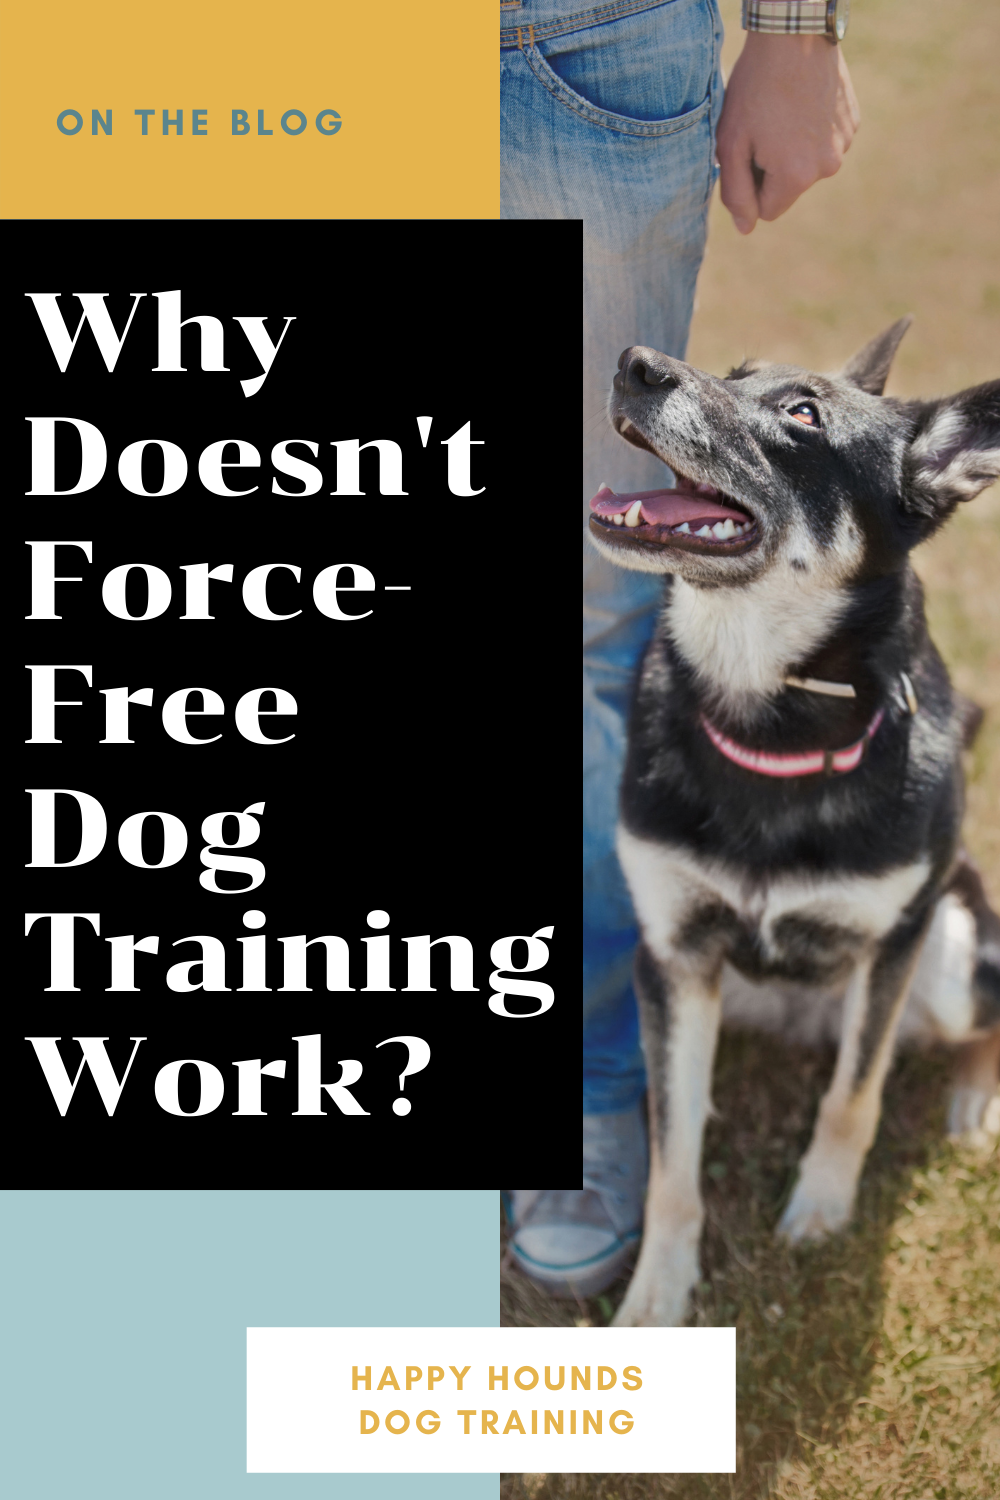 positive reinforcement dog training doesn't work